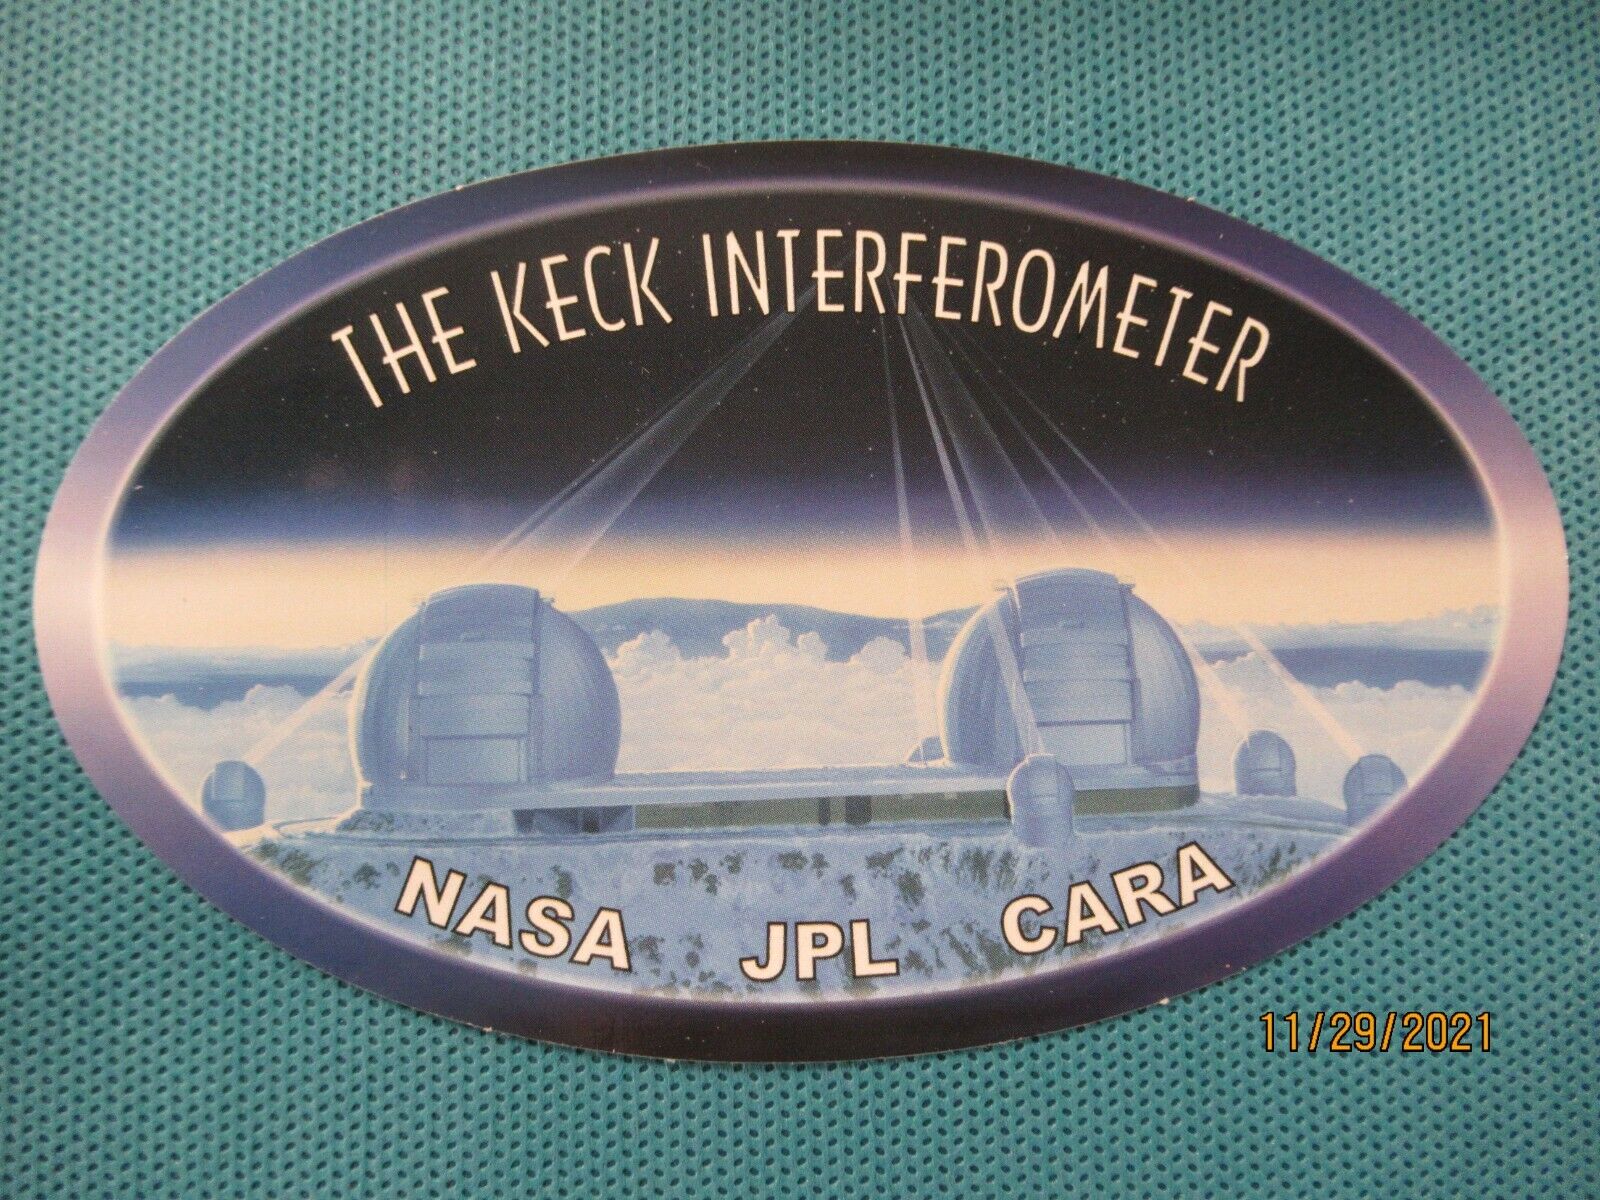 NASA The keck interferometer collectors sticker